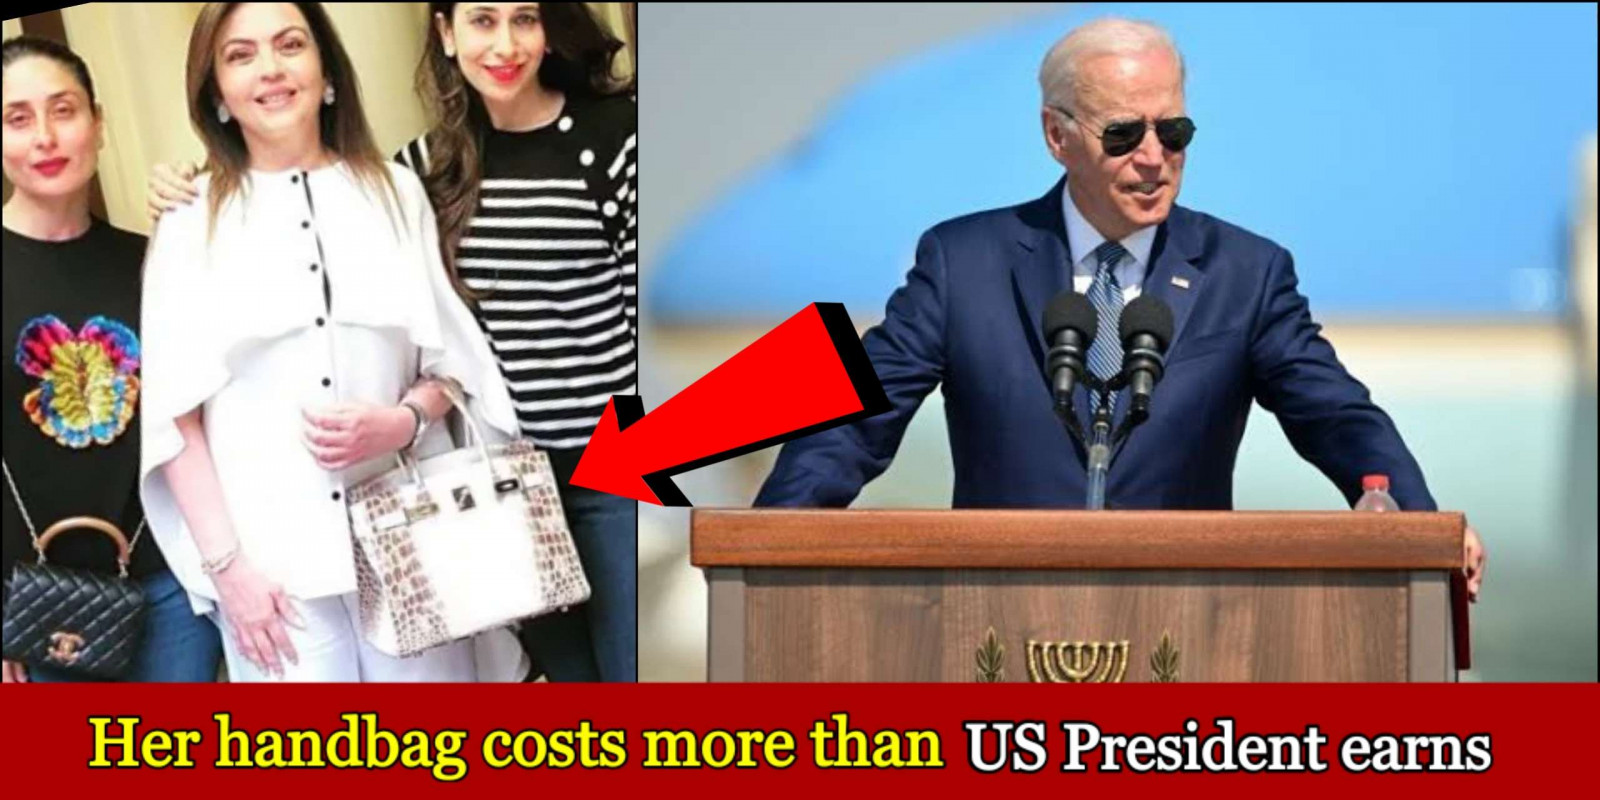 The handbag of Nita Ambani costs more than the yearly salary of US President Joe Bidden